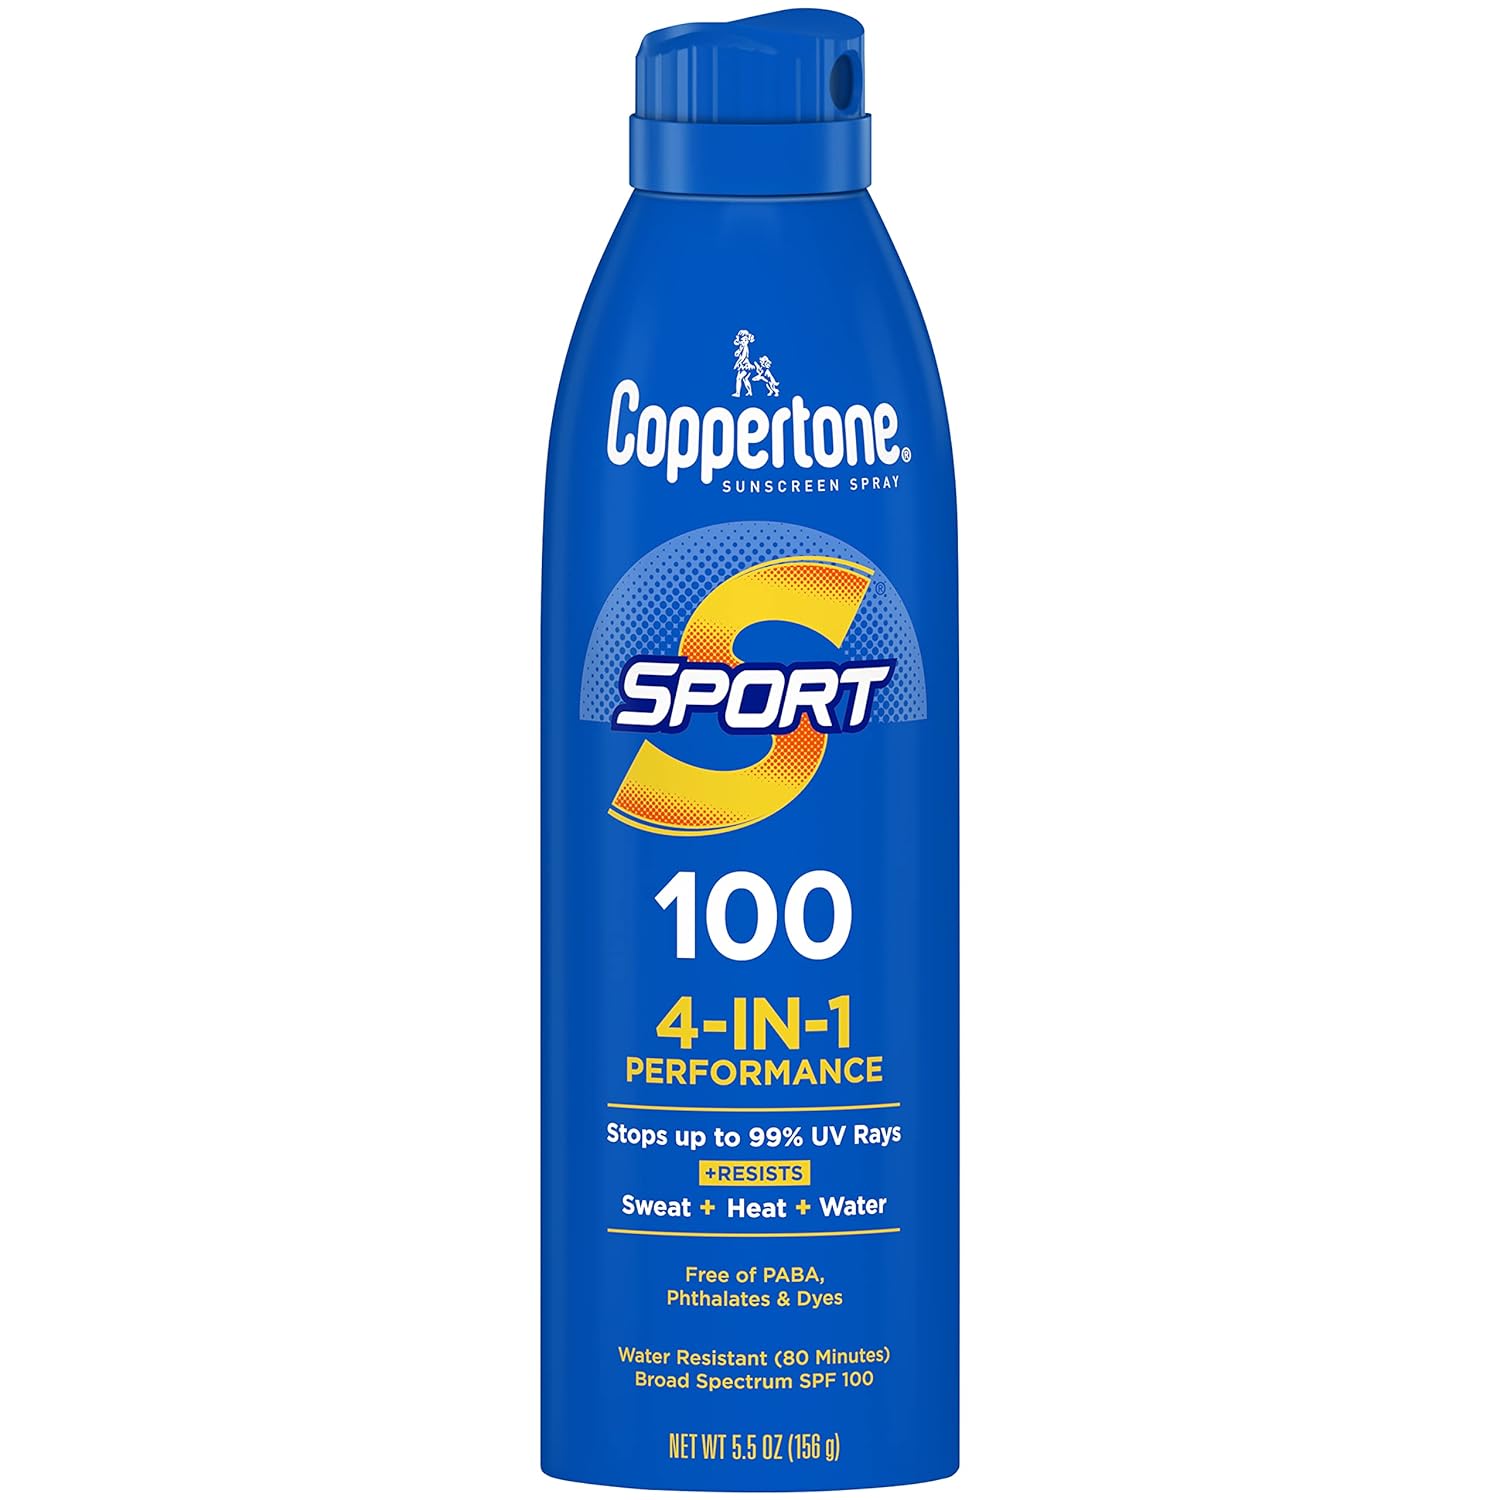 Coppertone SPORT Sunscreen Spray SPF 100, Water Resistant, Continuous Spray Sunscreen, Broad Spectrum SPF 100 Sunscreen, 5.5 Oz Spray